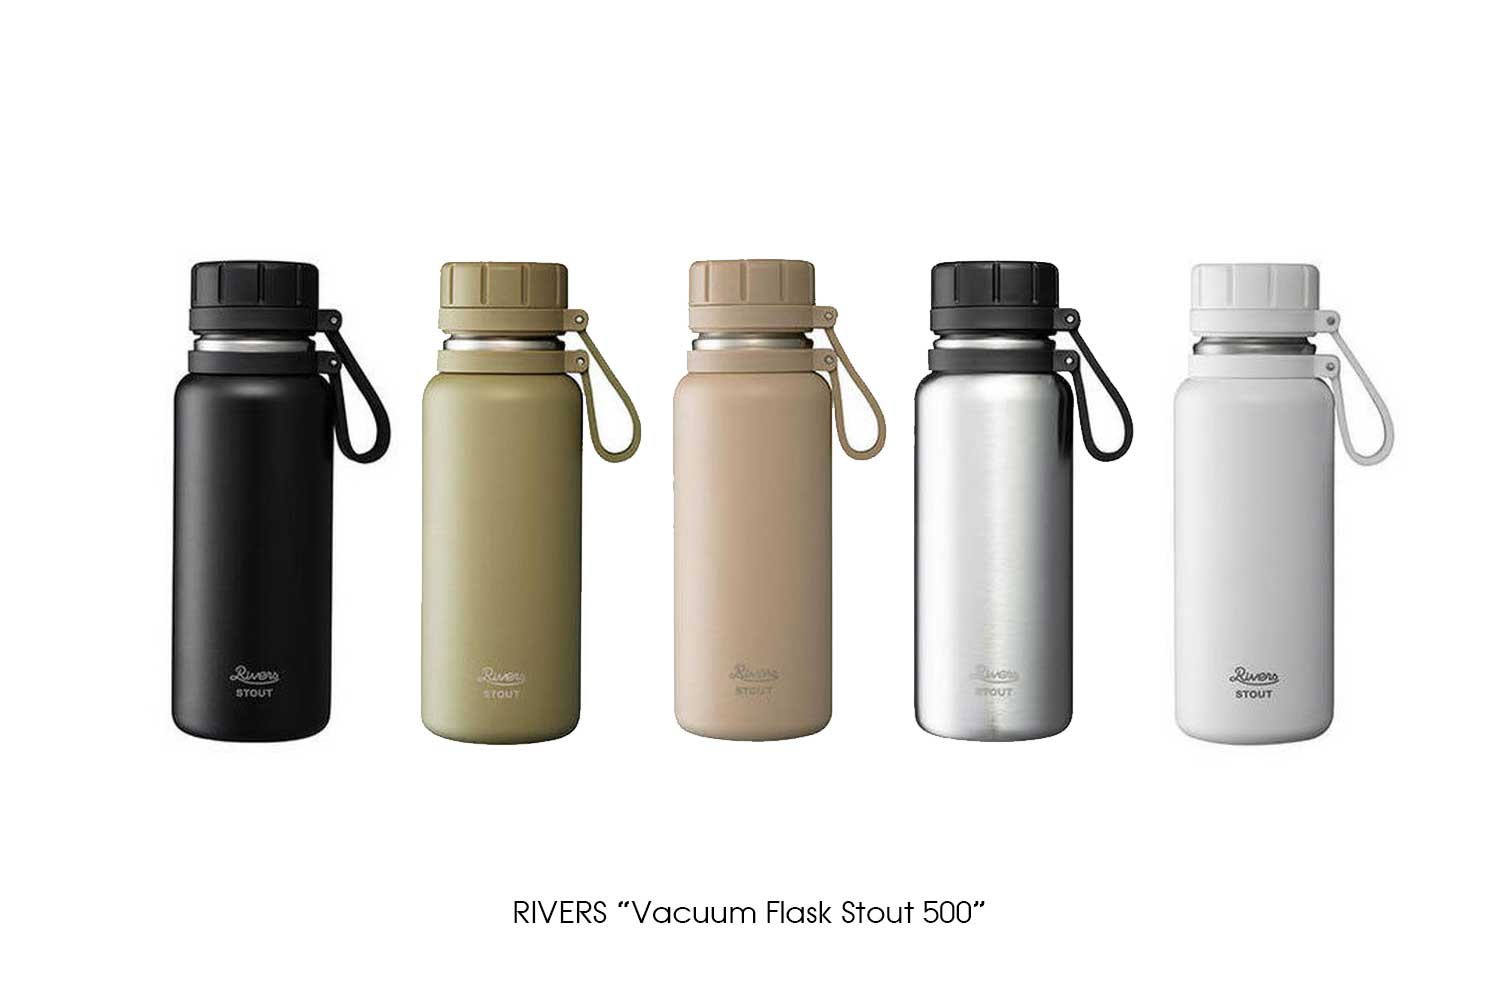 RIVERS "Vacuum Flask Stout 500"